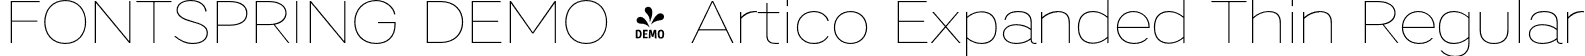 FONTSPRING DEMO - Artico Expanded Thin Regular font | Fontspring-DEMO-articoexpanded-thin.otf